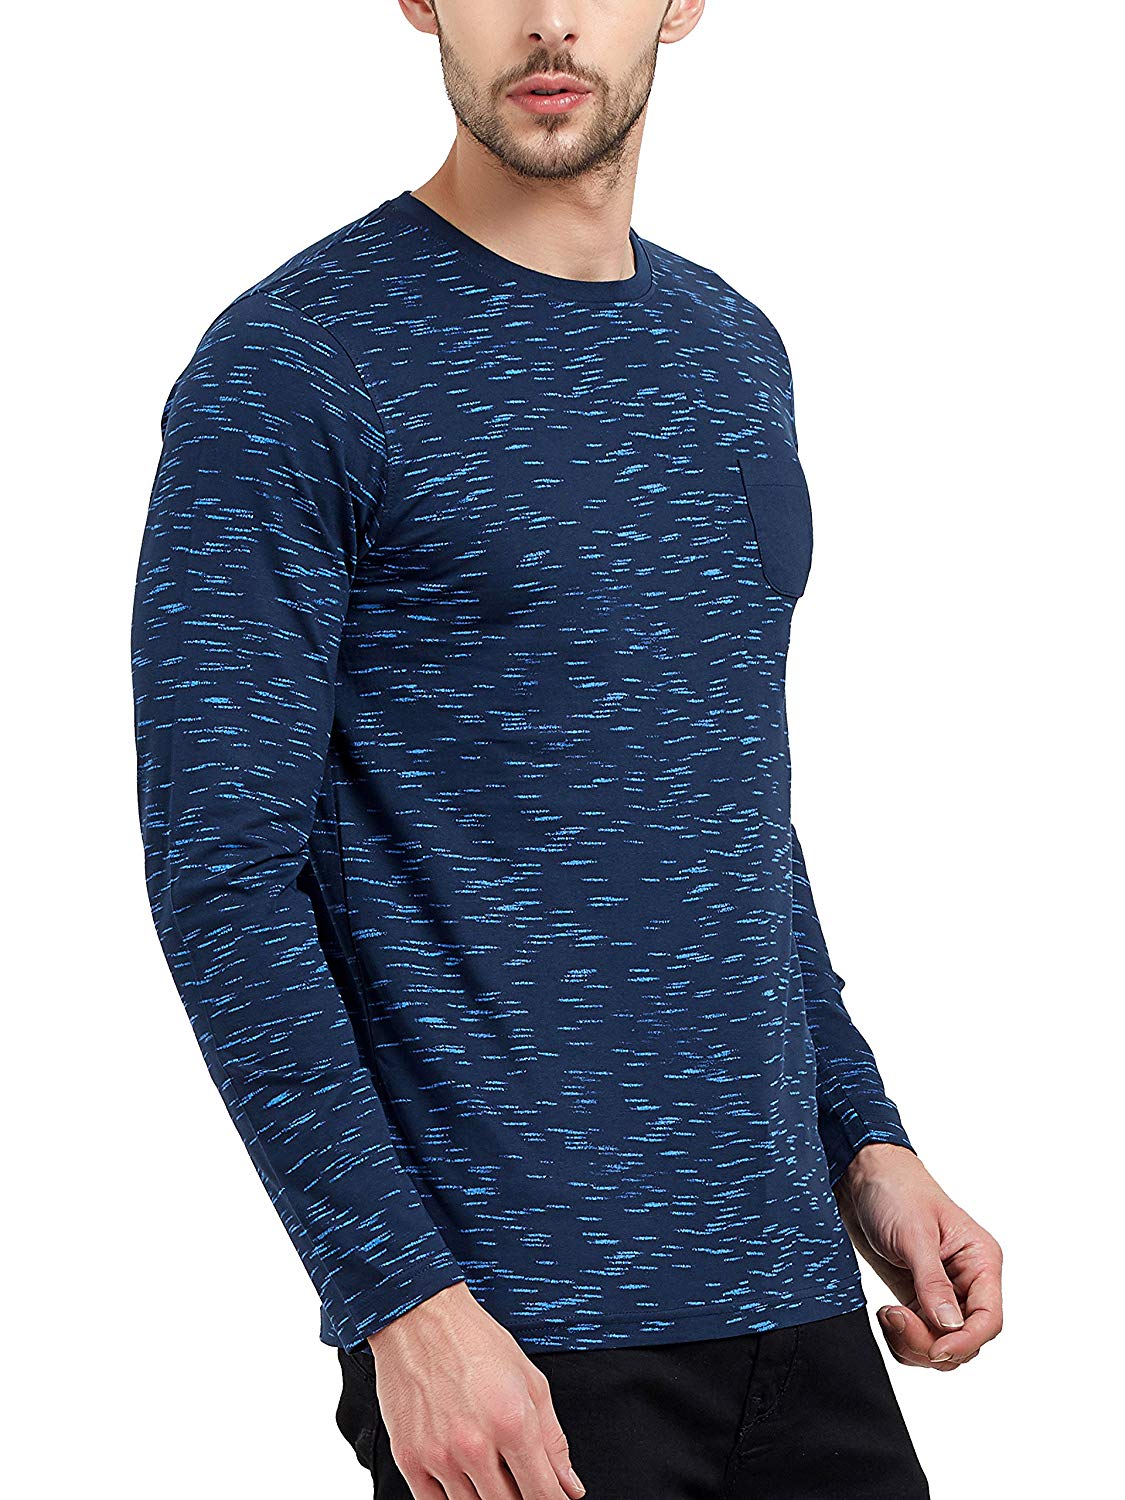 Maniac Men's Full sleeve Round Neck Printed Navy Cotton Tshirt - Guys World